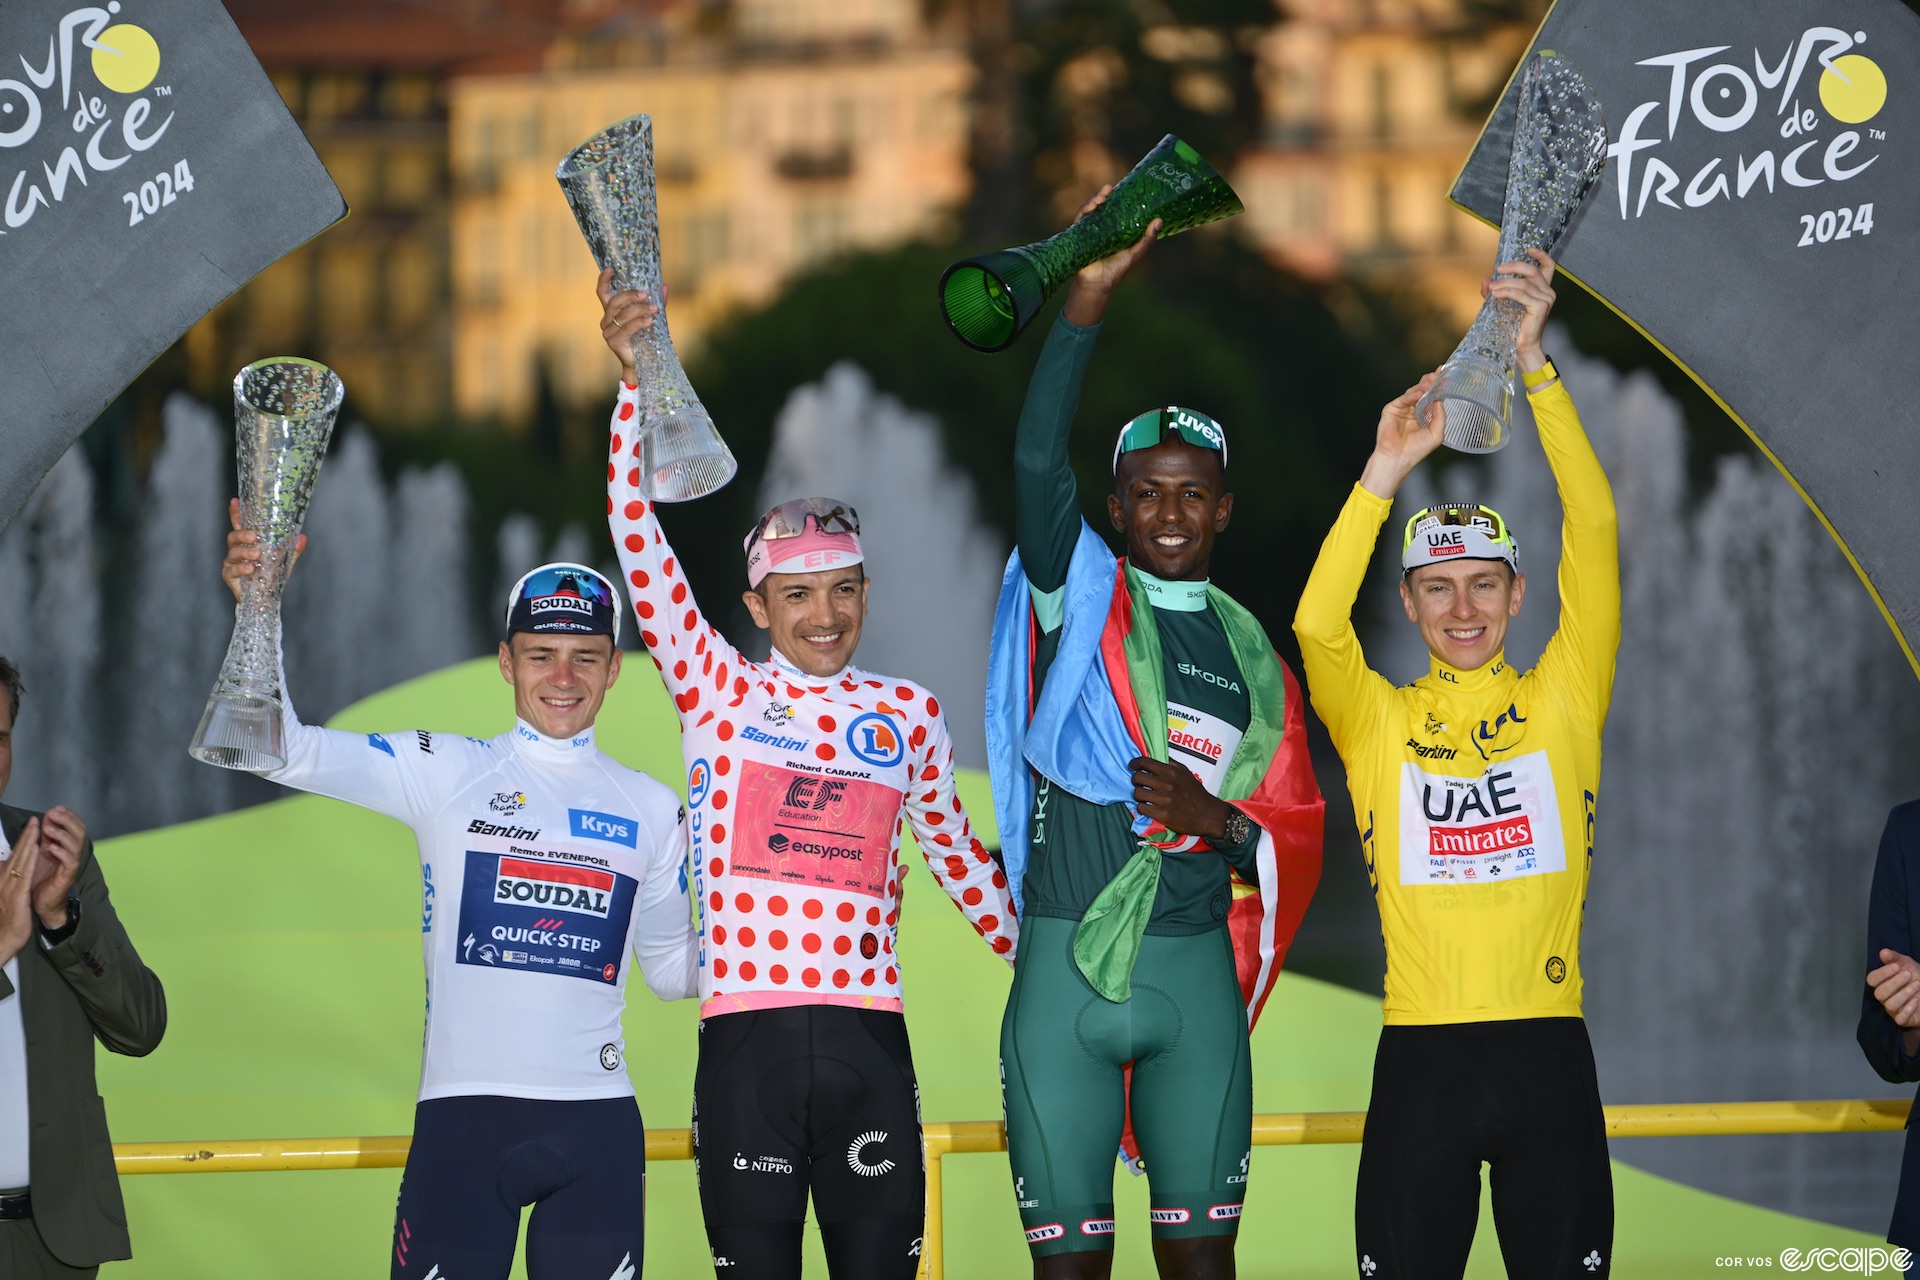 Remco Evenepeol, Richard Carapaz, Biniam Girmay, and Tadej Pogačar secured the four major jerseys of the 2024 Tour de France.